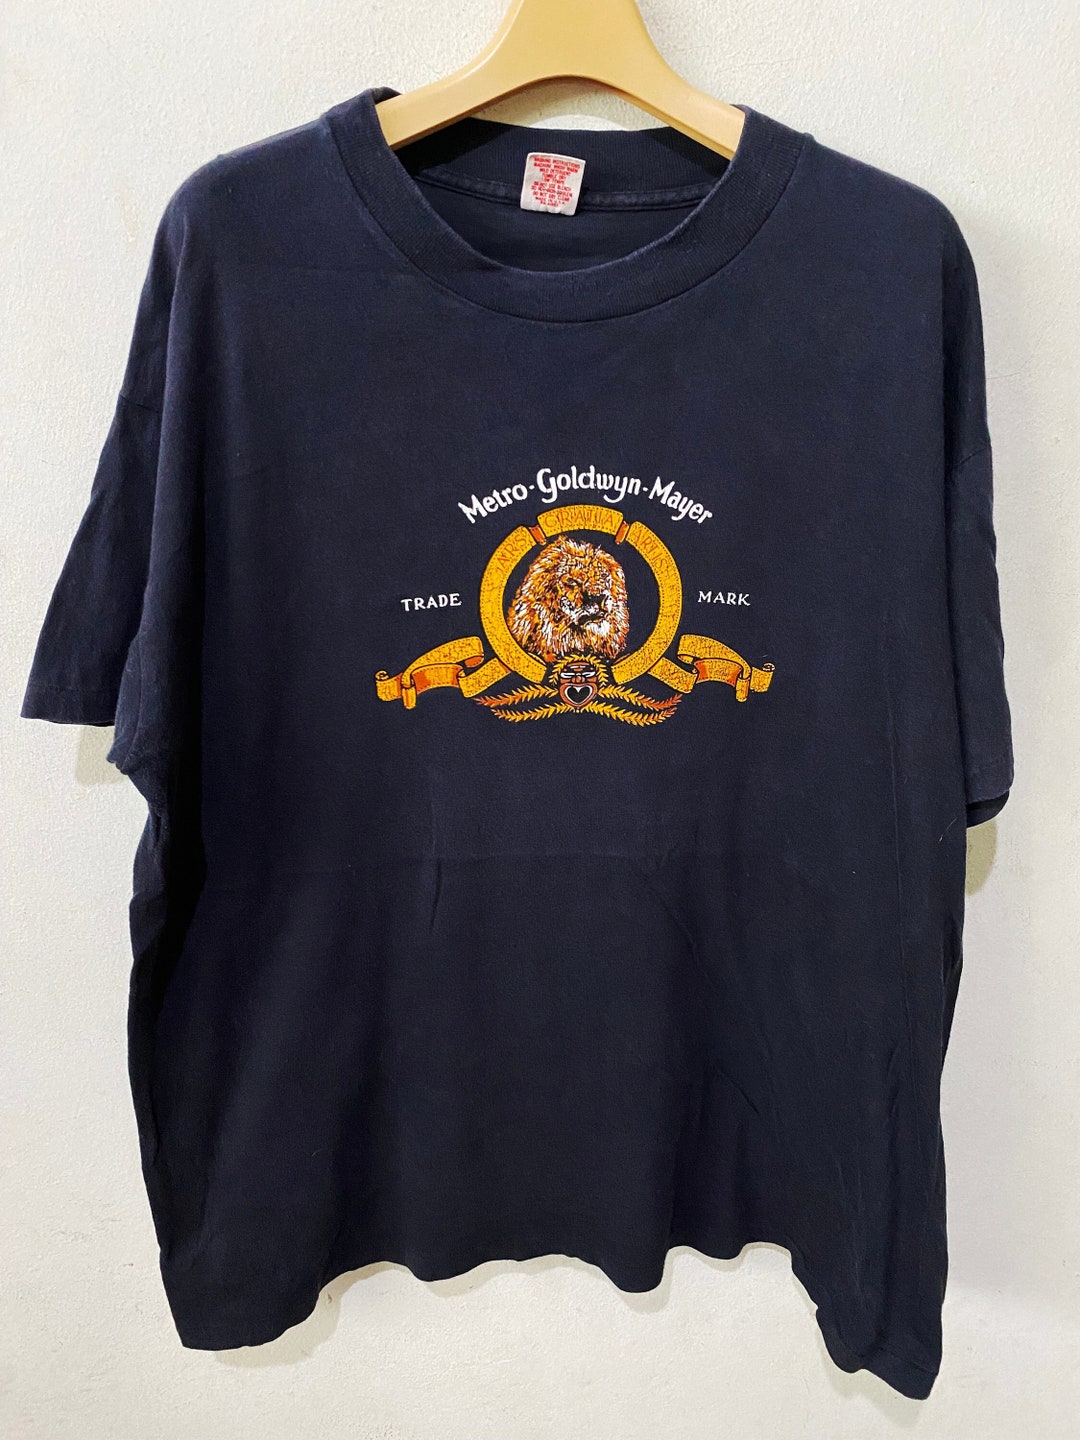 Vintage 90s Metro Goldwyn Mayer Shirt Size XL - Etsy